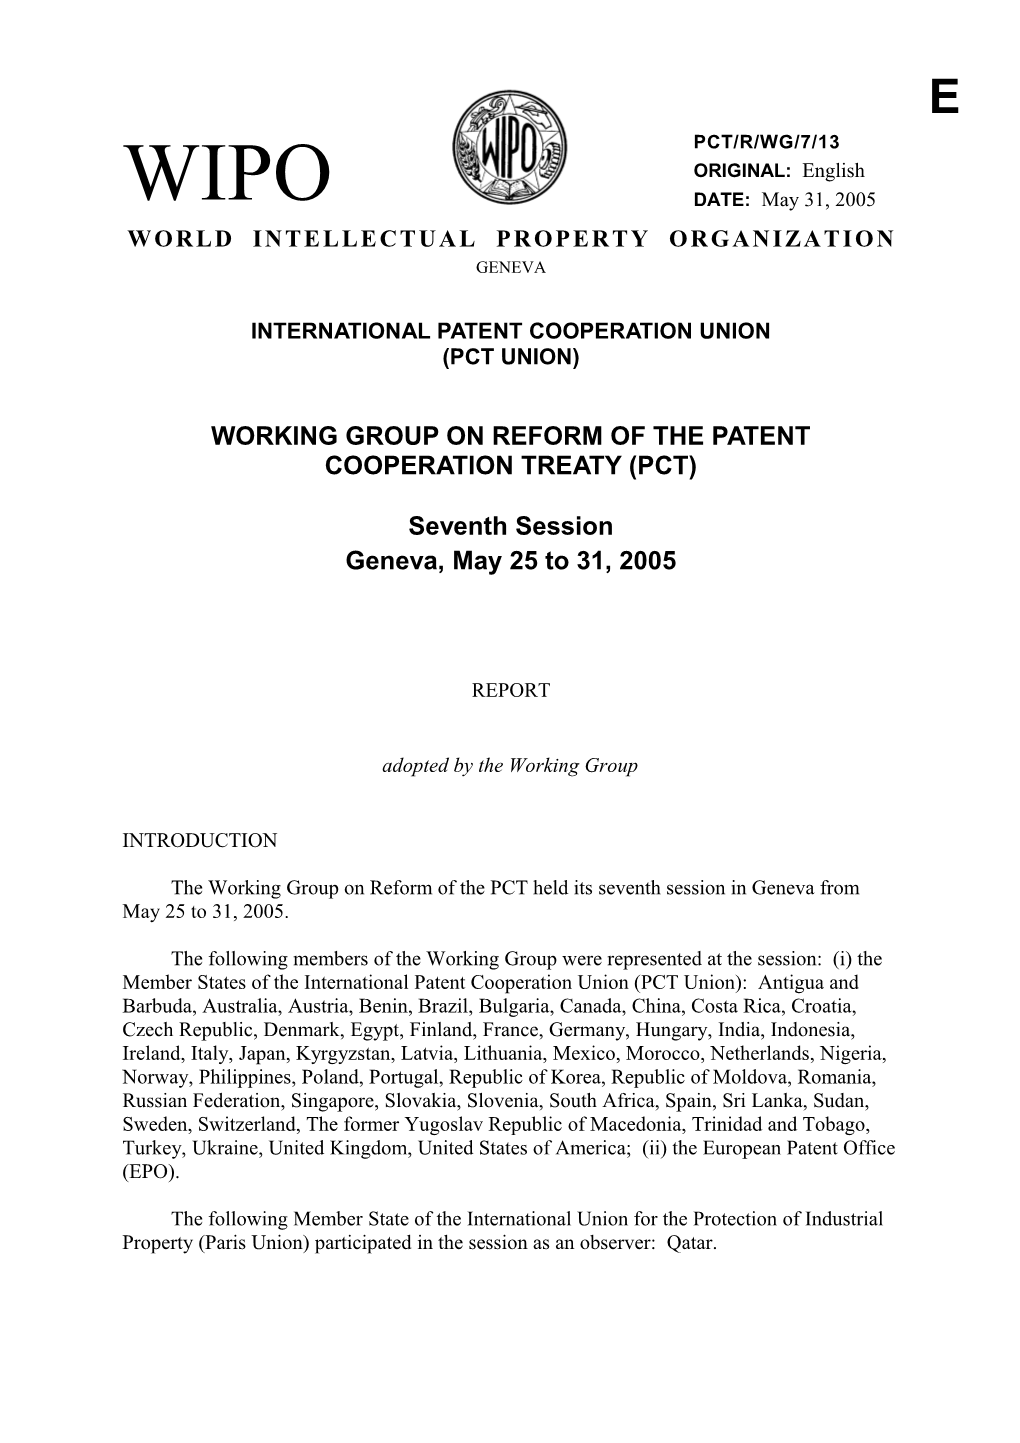 PCT/R/WG/7/13: Report